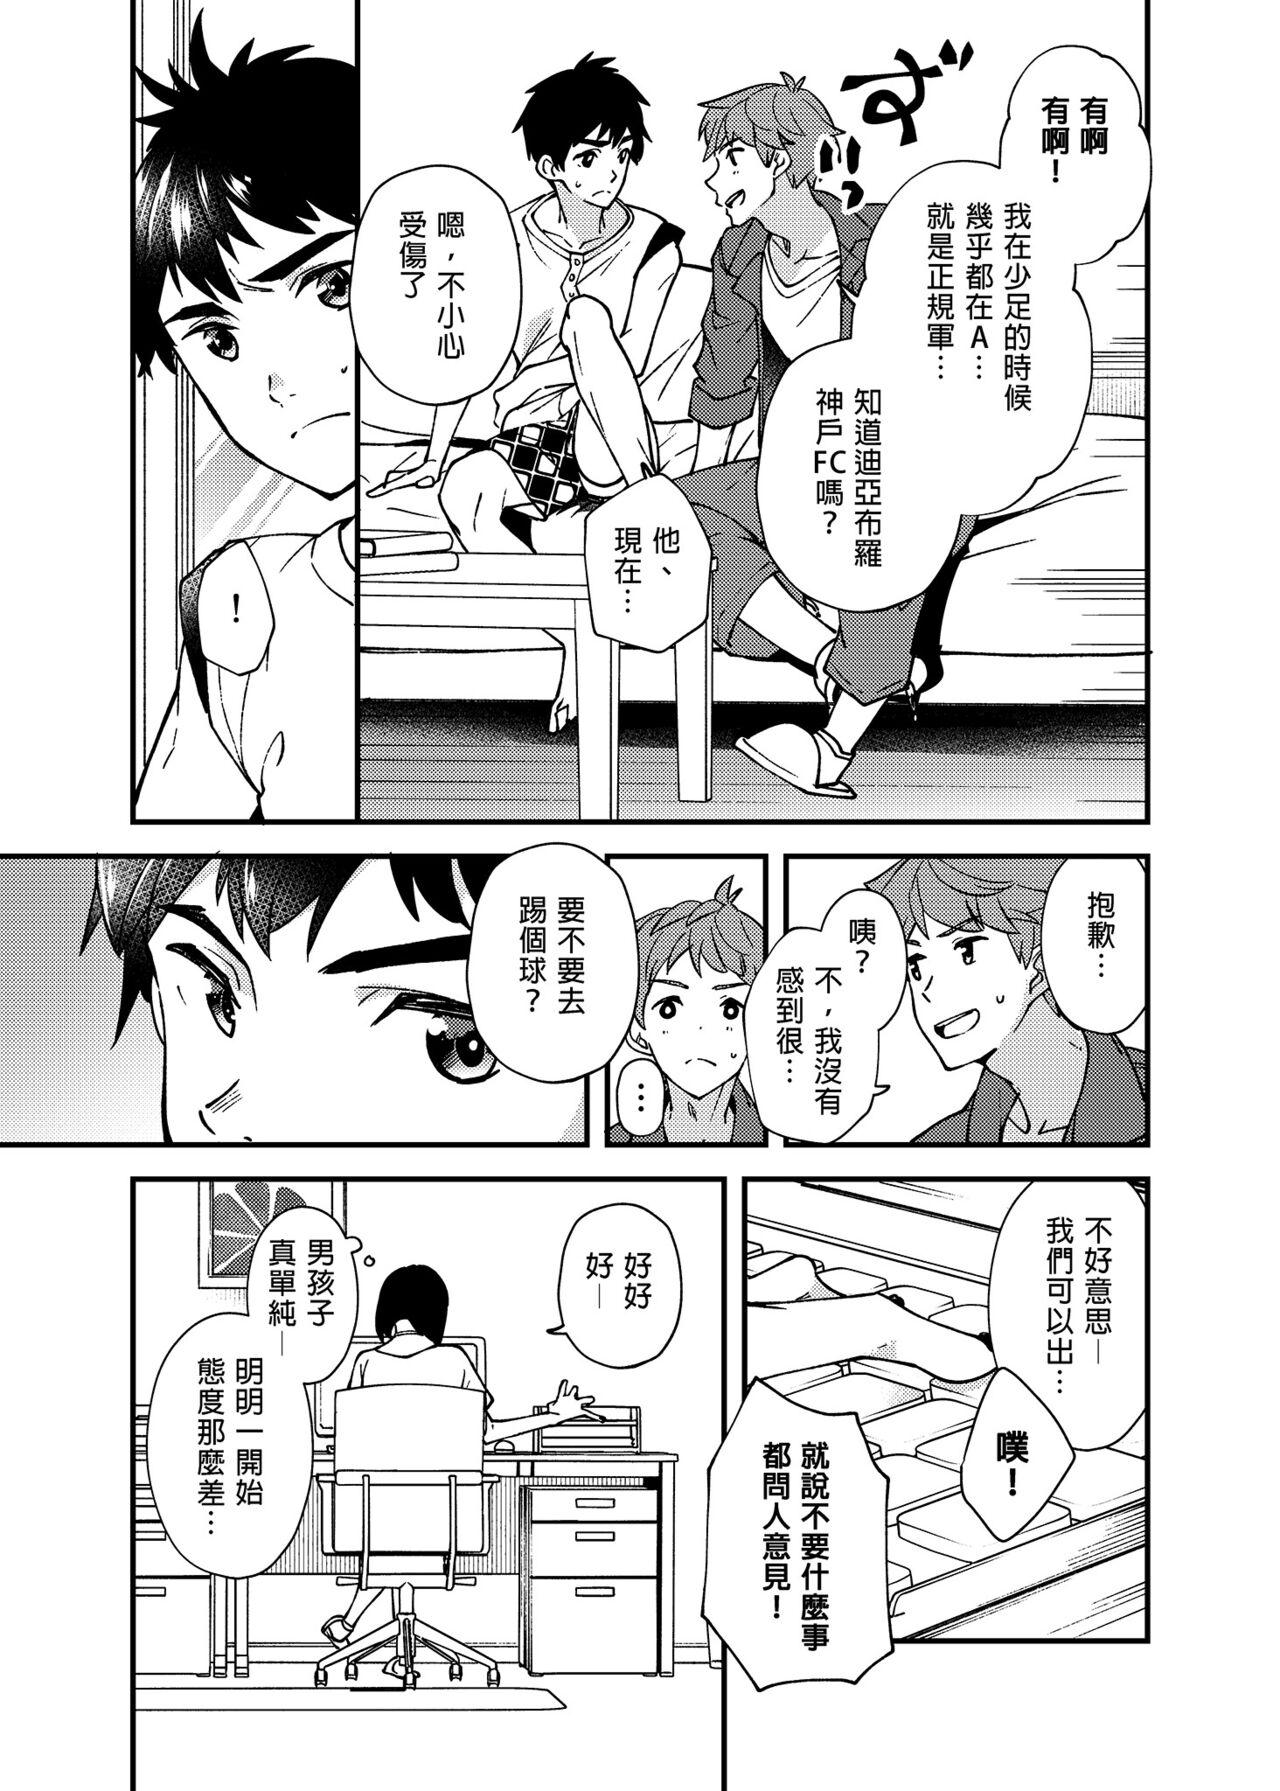 Show Na no ka bakari no | 只有7天嗎 - Original Lezdom - Page 10